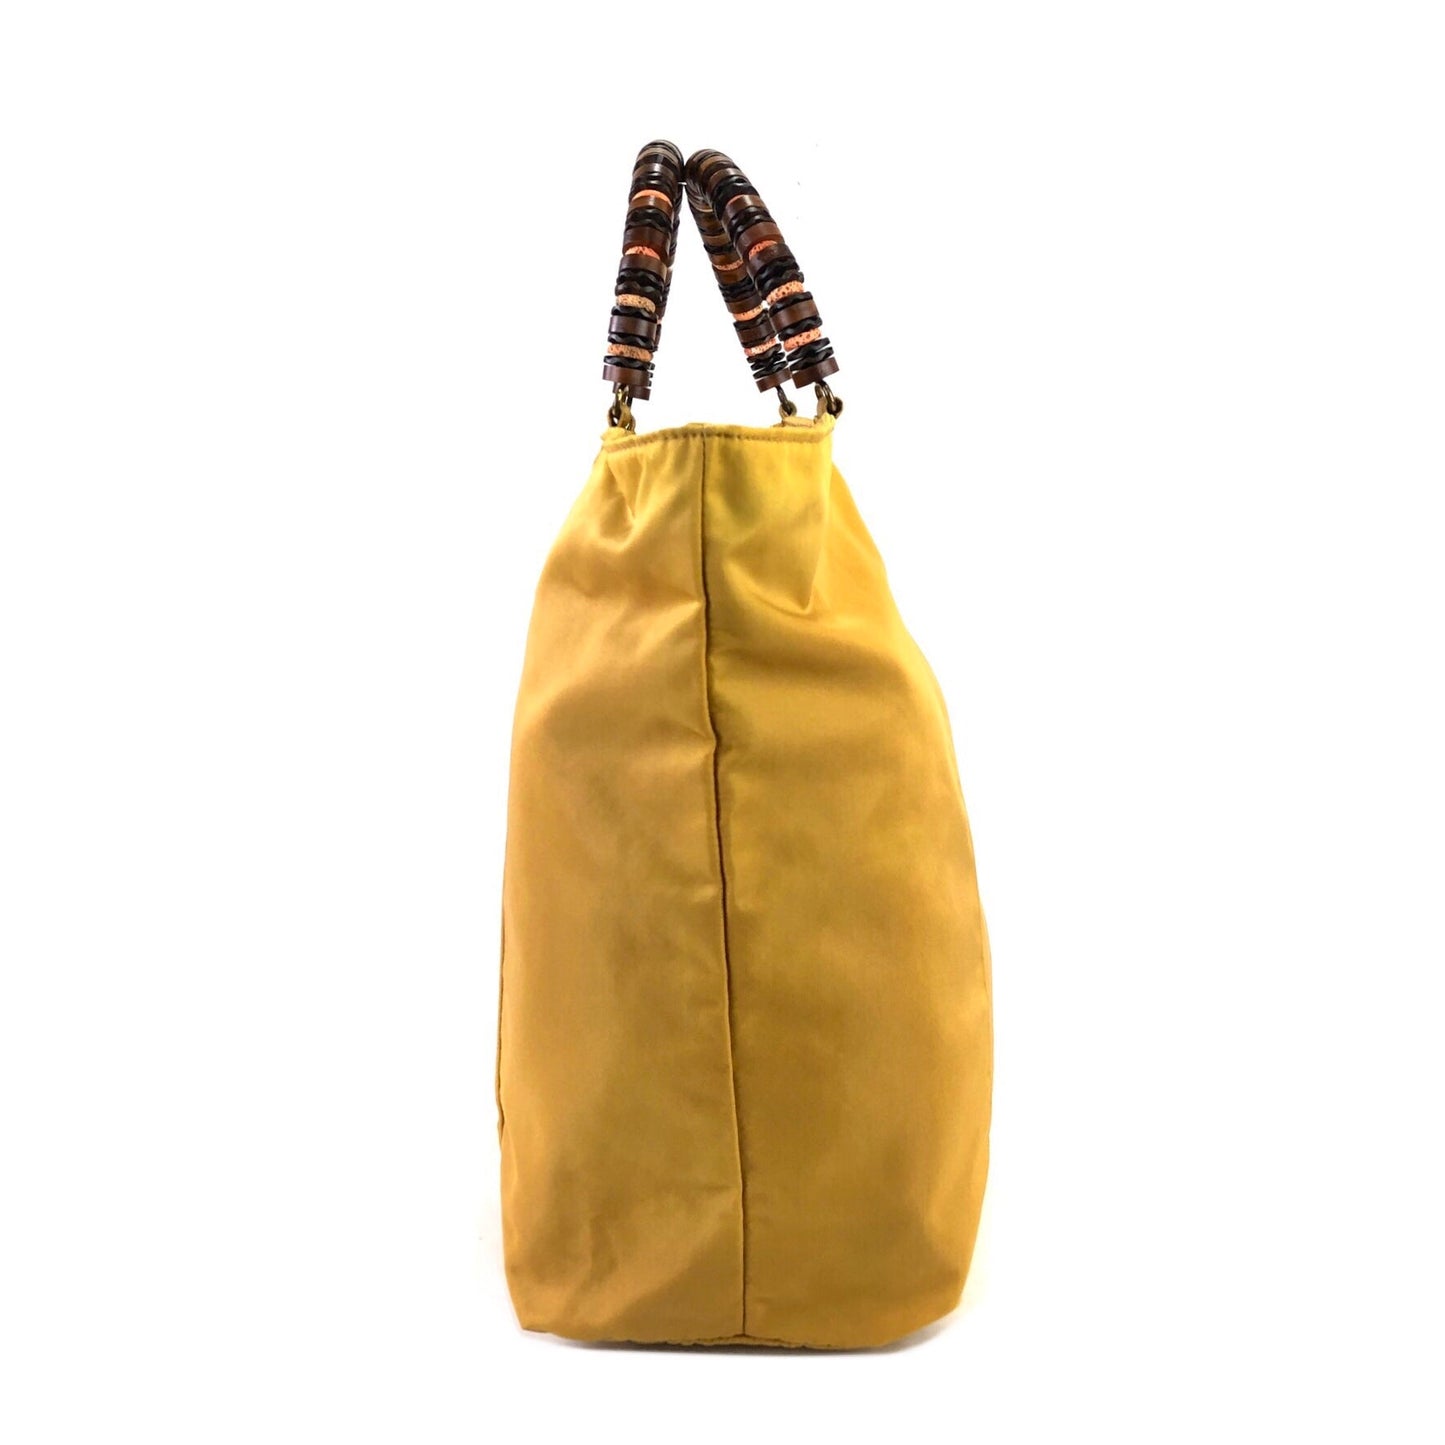 PRADA logo nylon wood beads coral handle handbag yellow vintage zcbfxe